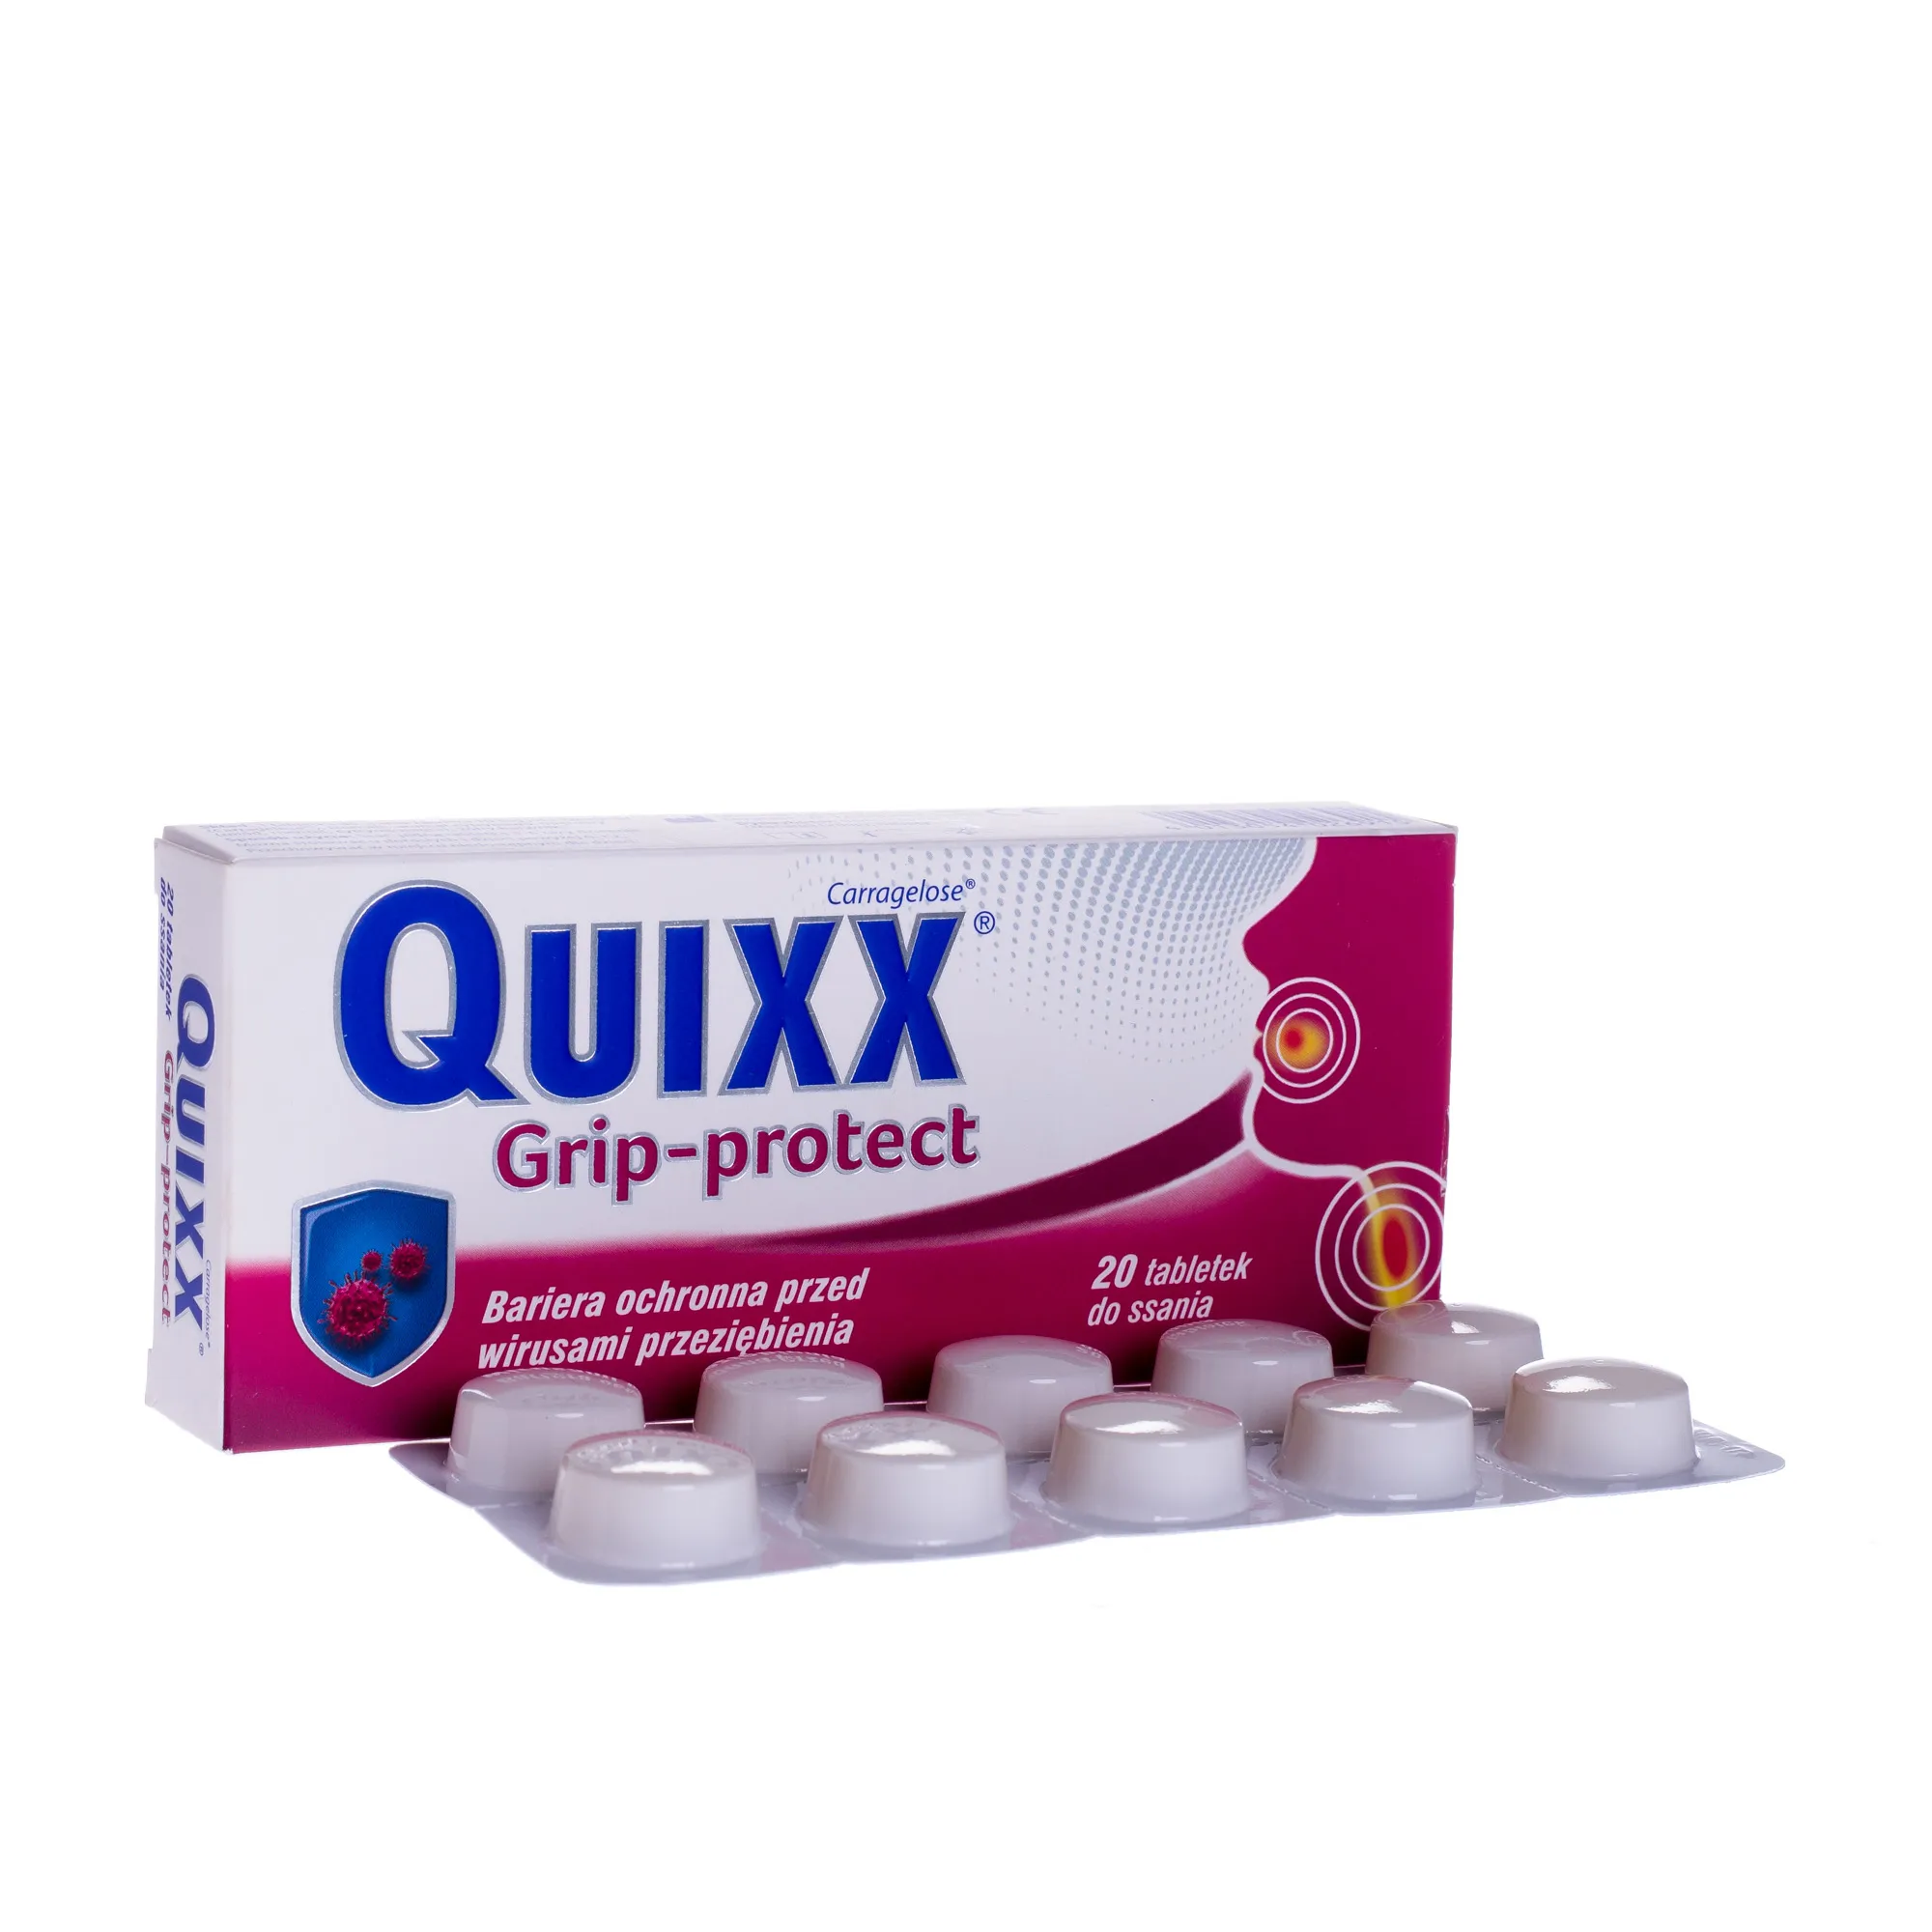 Quixx Grip-protect, 20 tabletek do ssania 